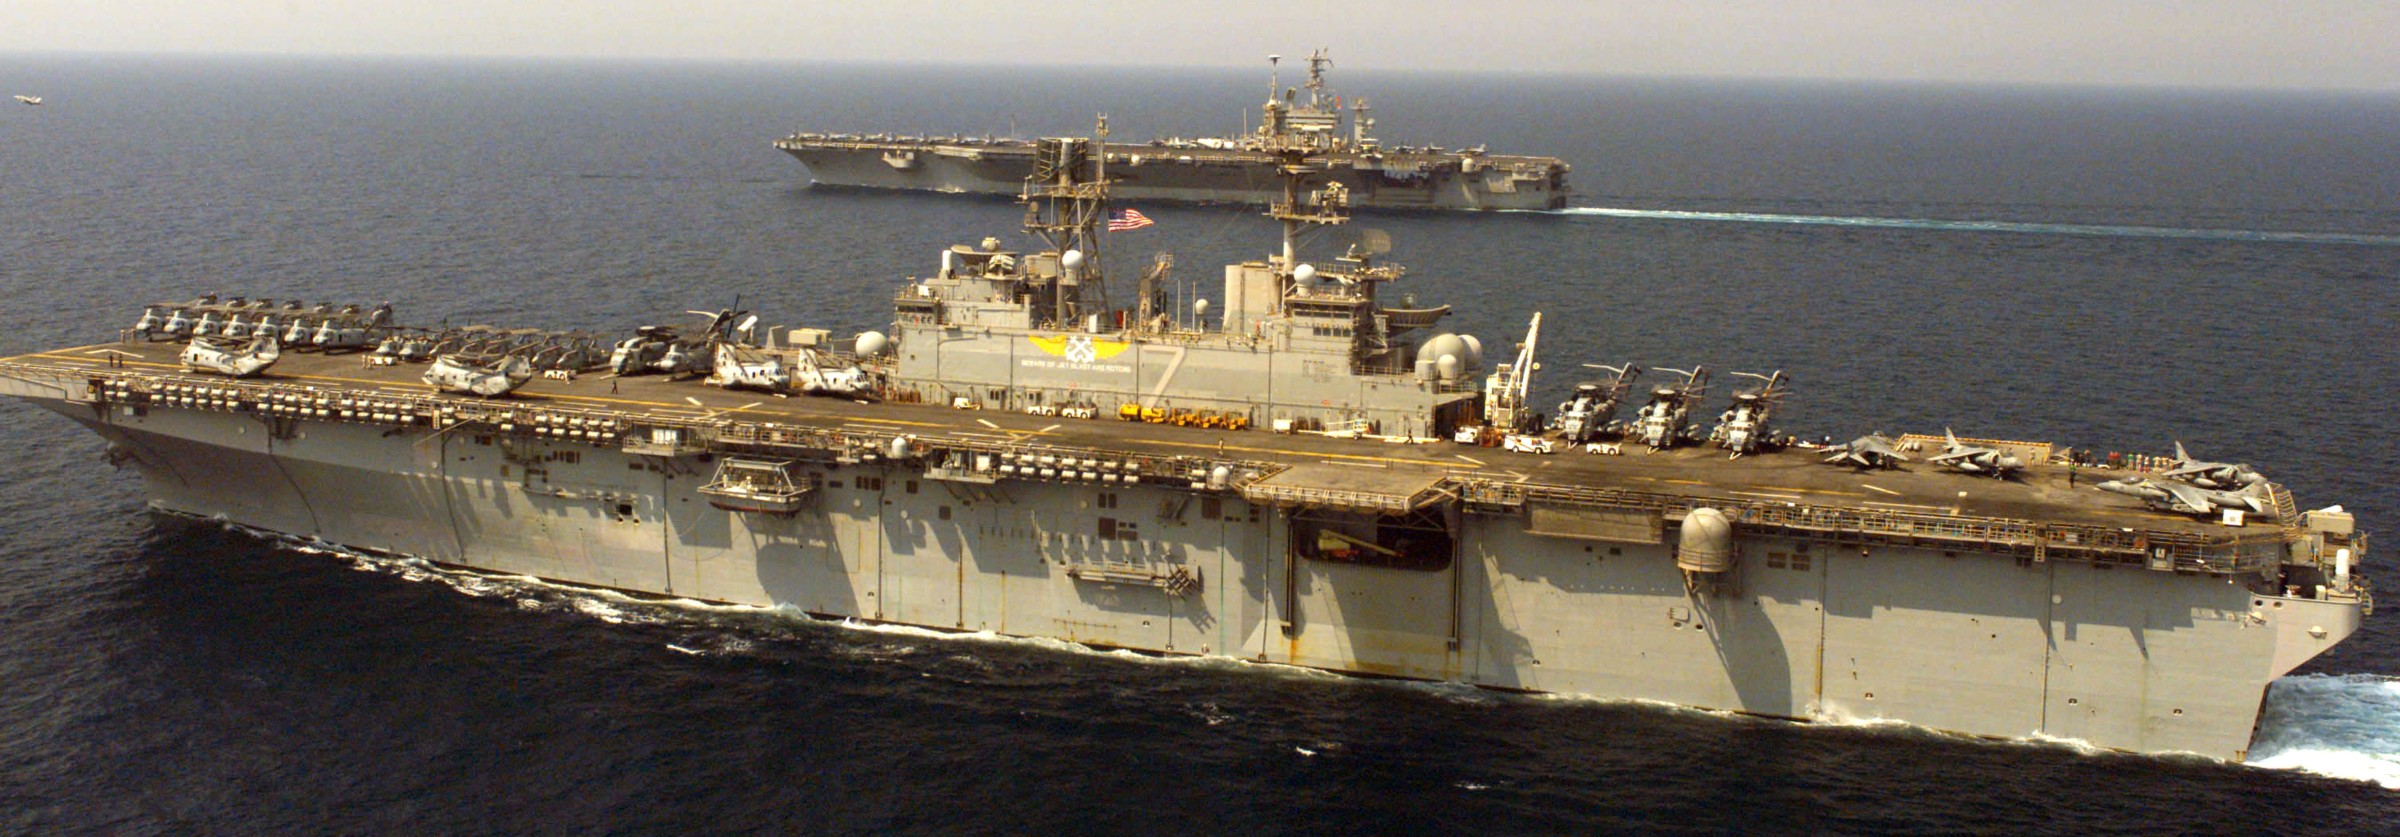 lhd-7 uss iwo jima wasp class amphibious assault ship dock landing helicopter us navy hmm-264 marines arabian gulf 2003 13